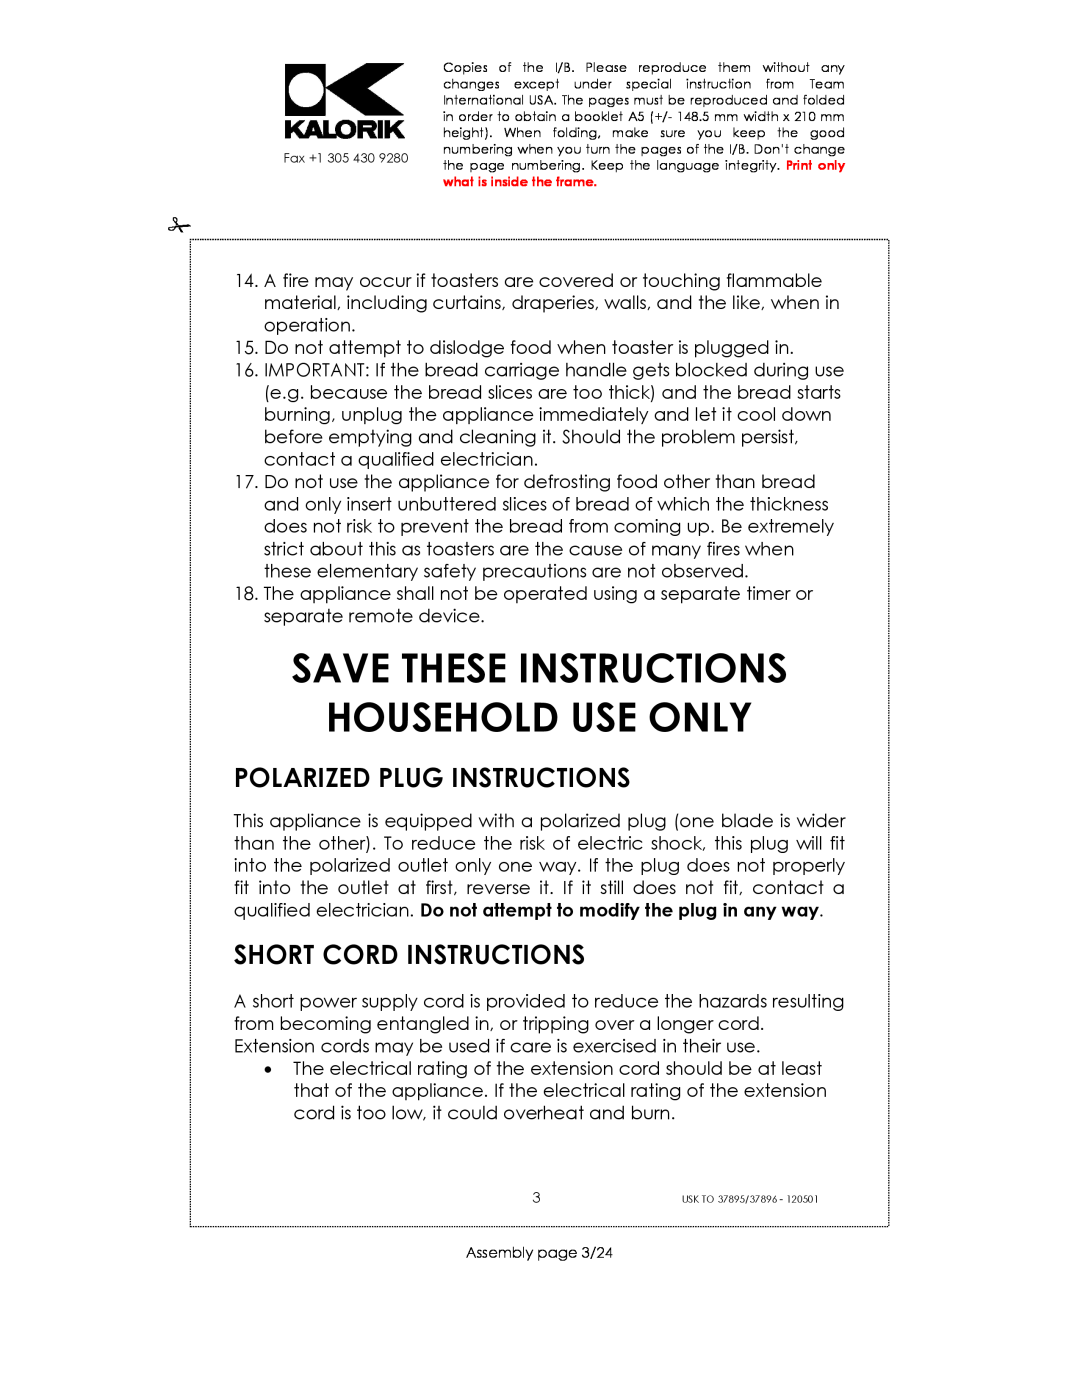 Kalorik USK TO 37895 Save These Instructions Household Use Only, Polarized Plug Instructions, Short Cord Instructions 